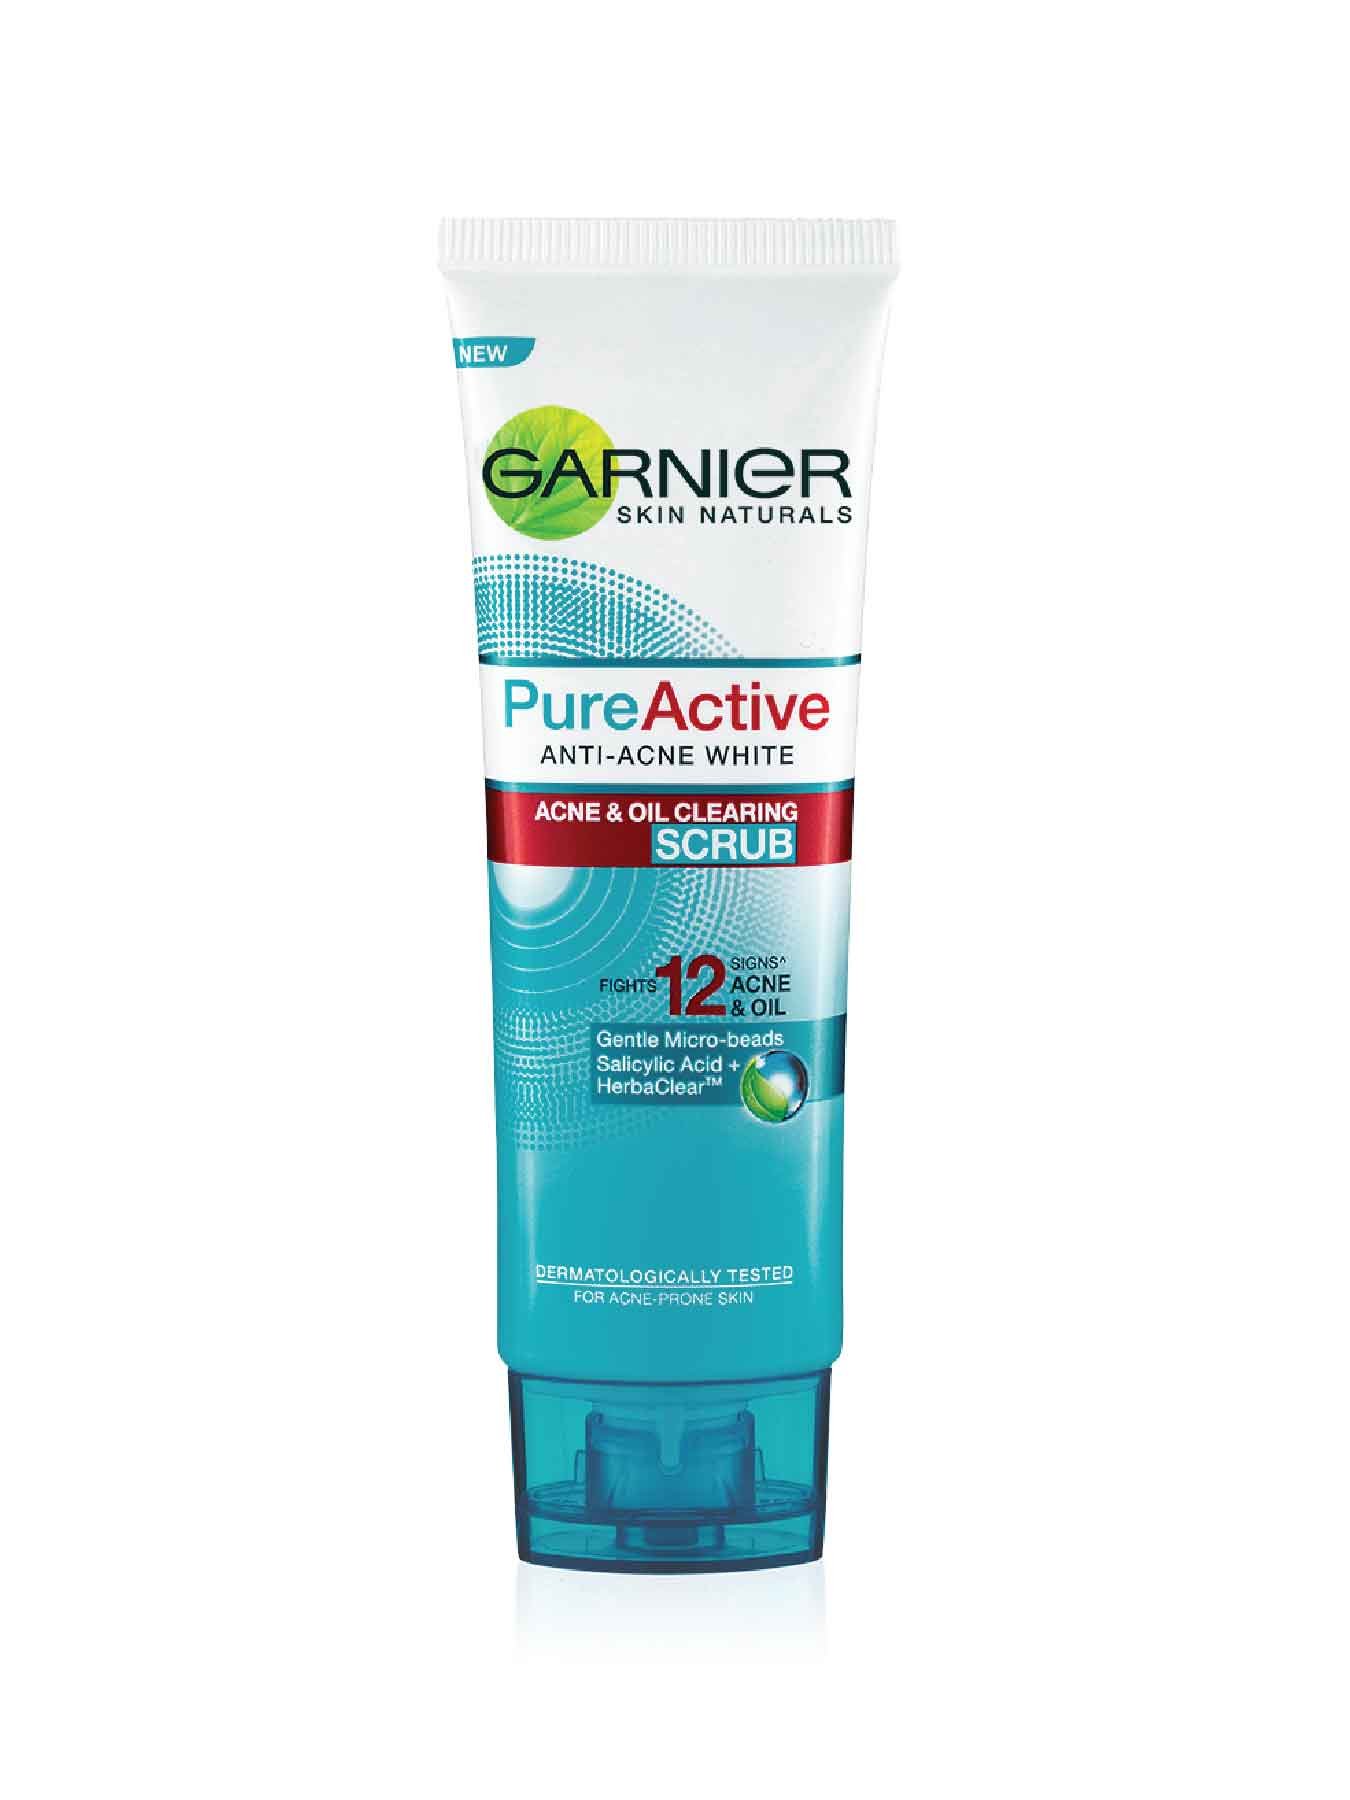 Garnier Pure Active, Anti-Acne White, Acne & Oil Clearing